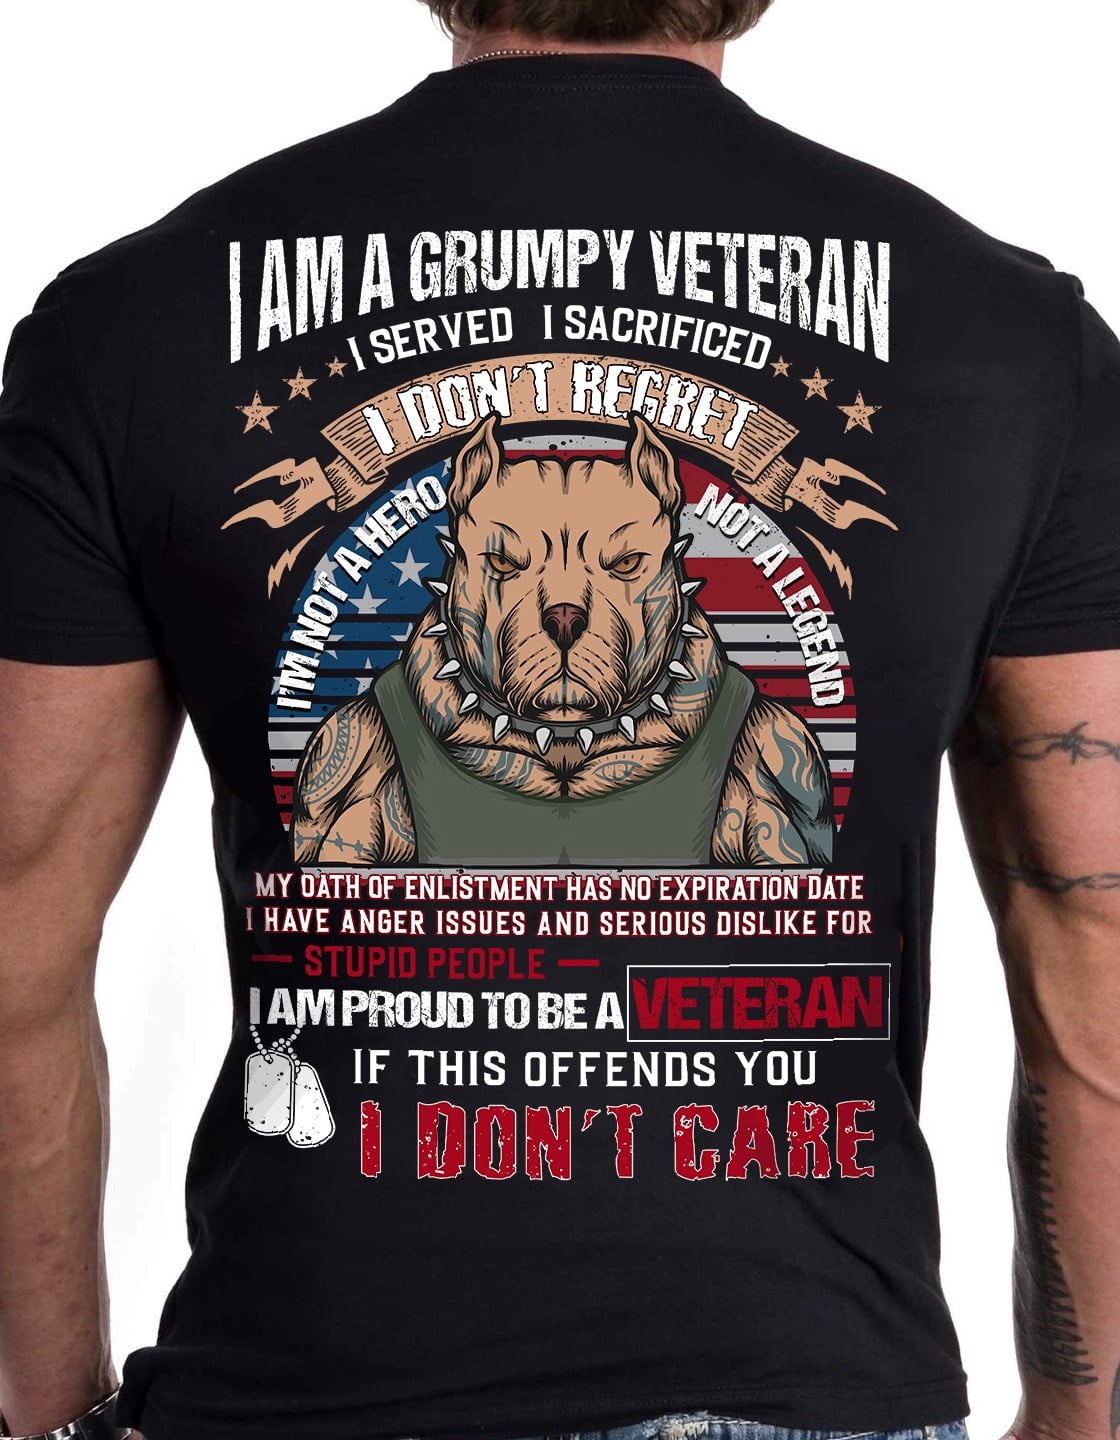 I am a grumpy veteran I don't regret - Pittbull dog